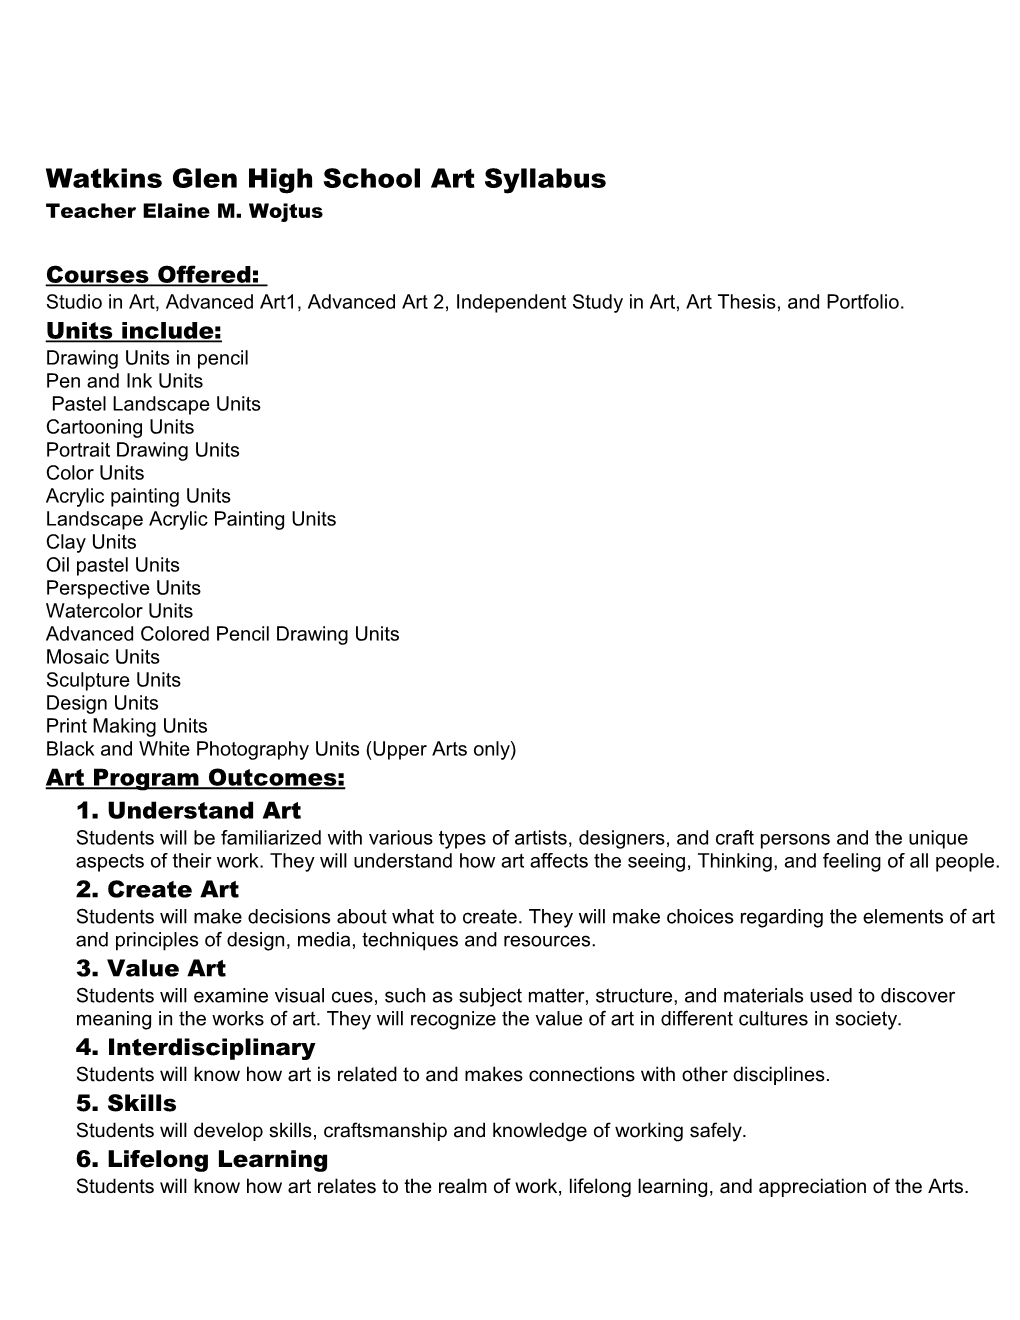 Grading for Watkins Glen High School Art Classes